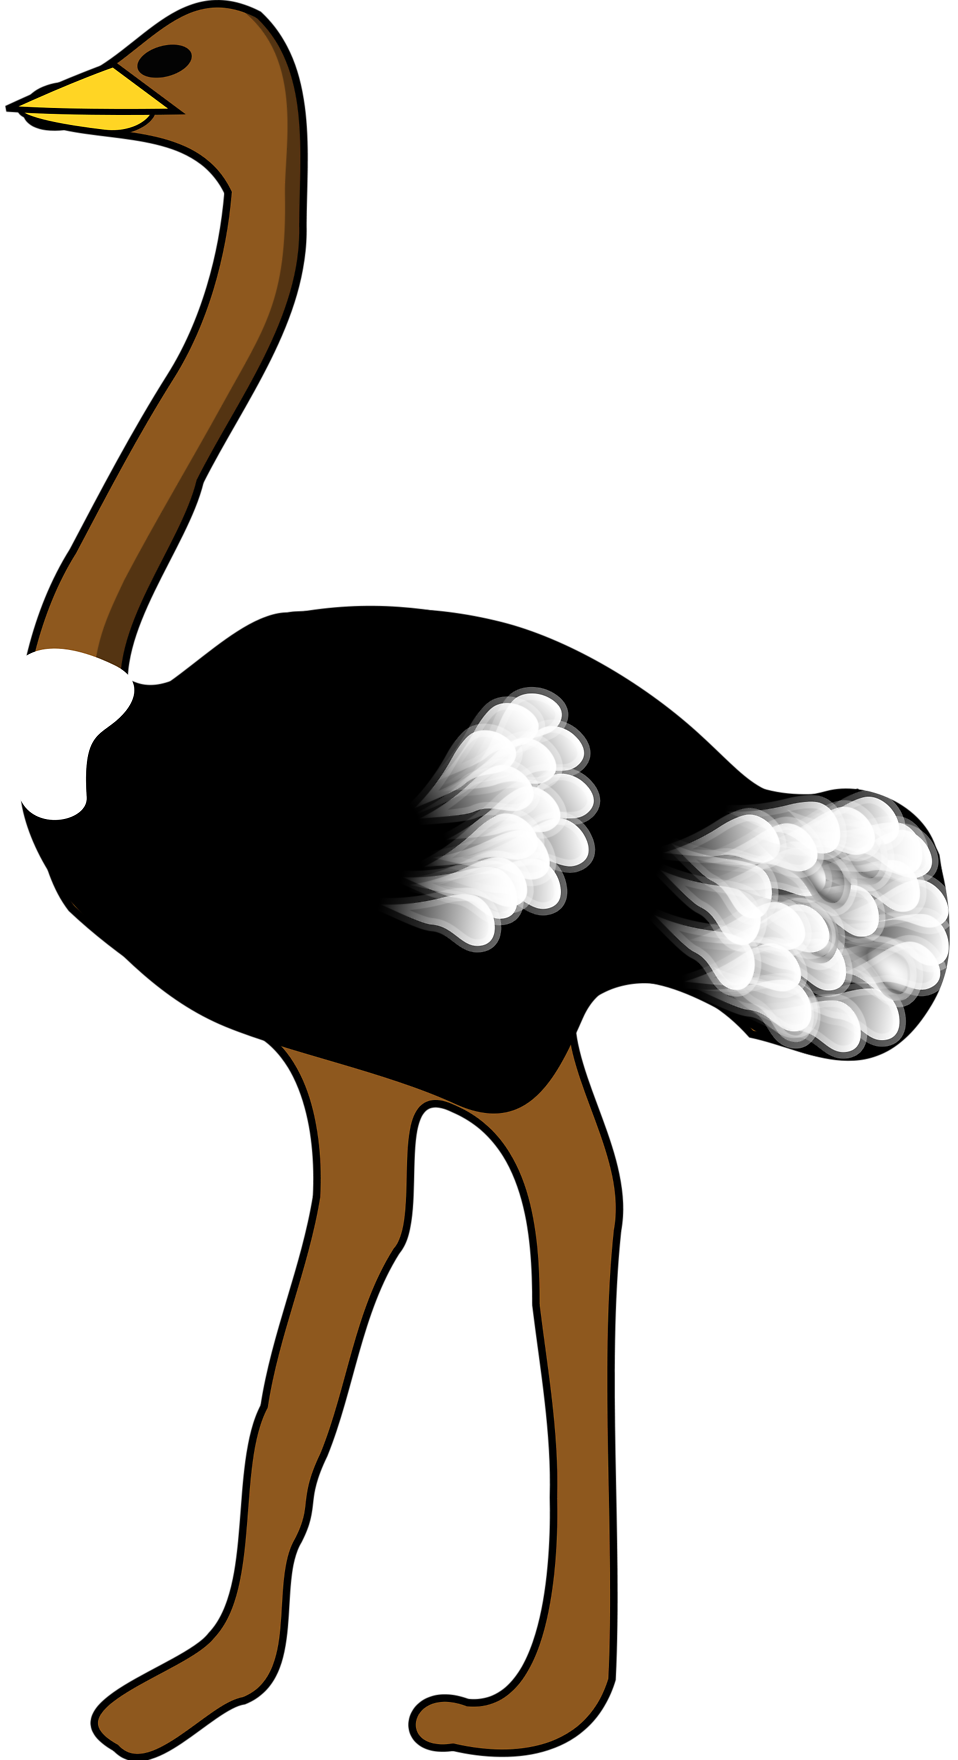 Ostrich clipart public domain. Free stock photo illustration